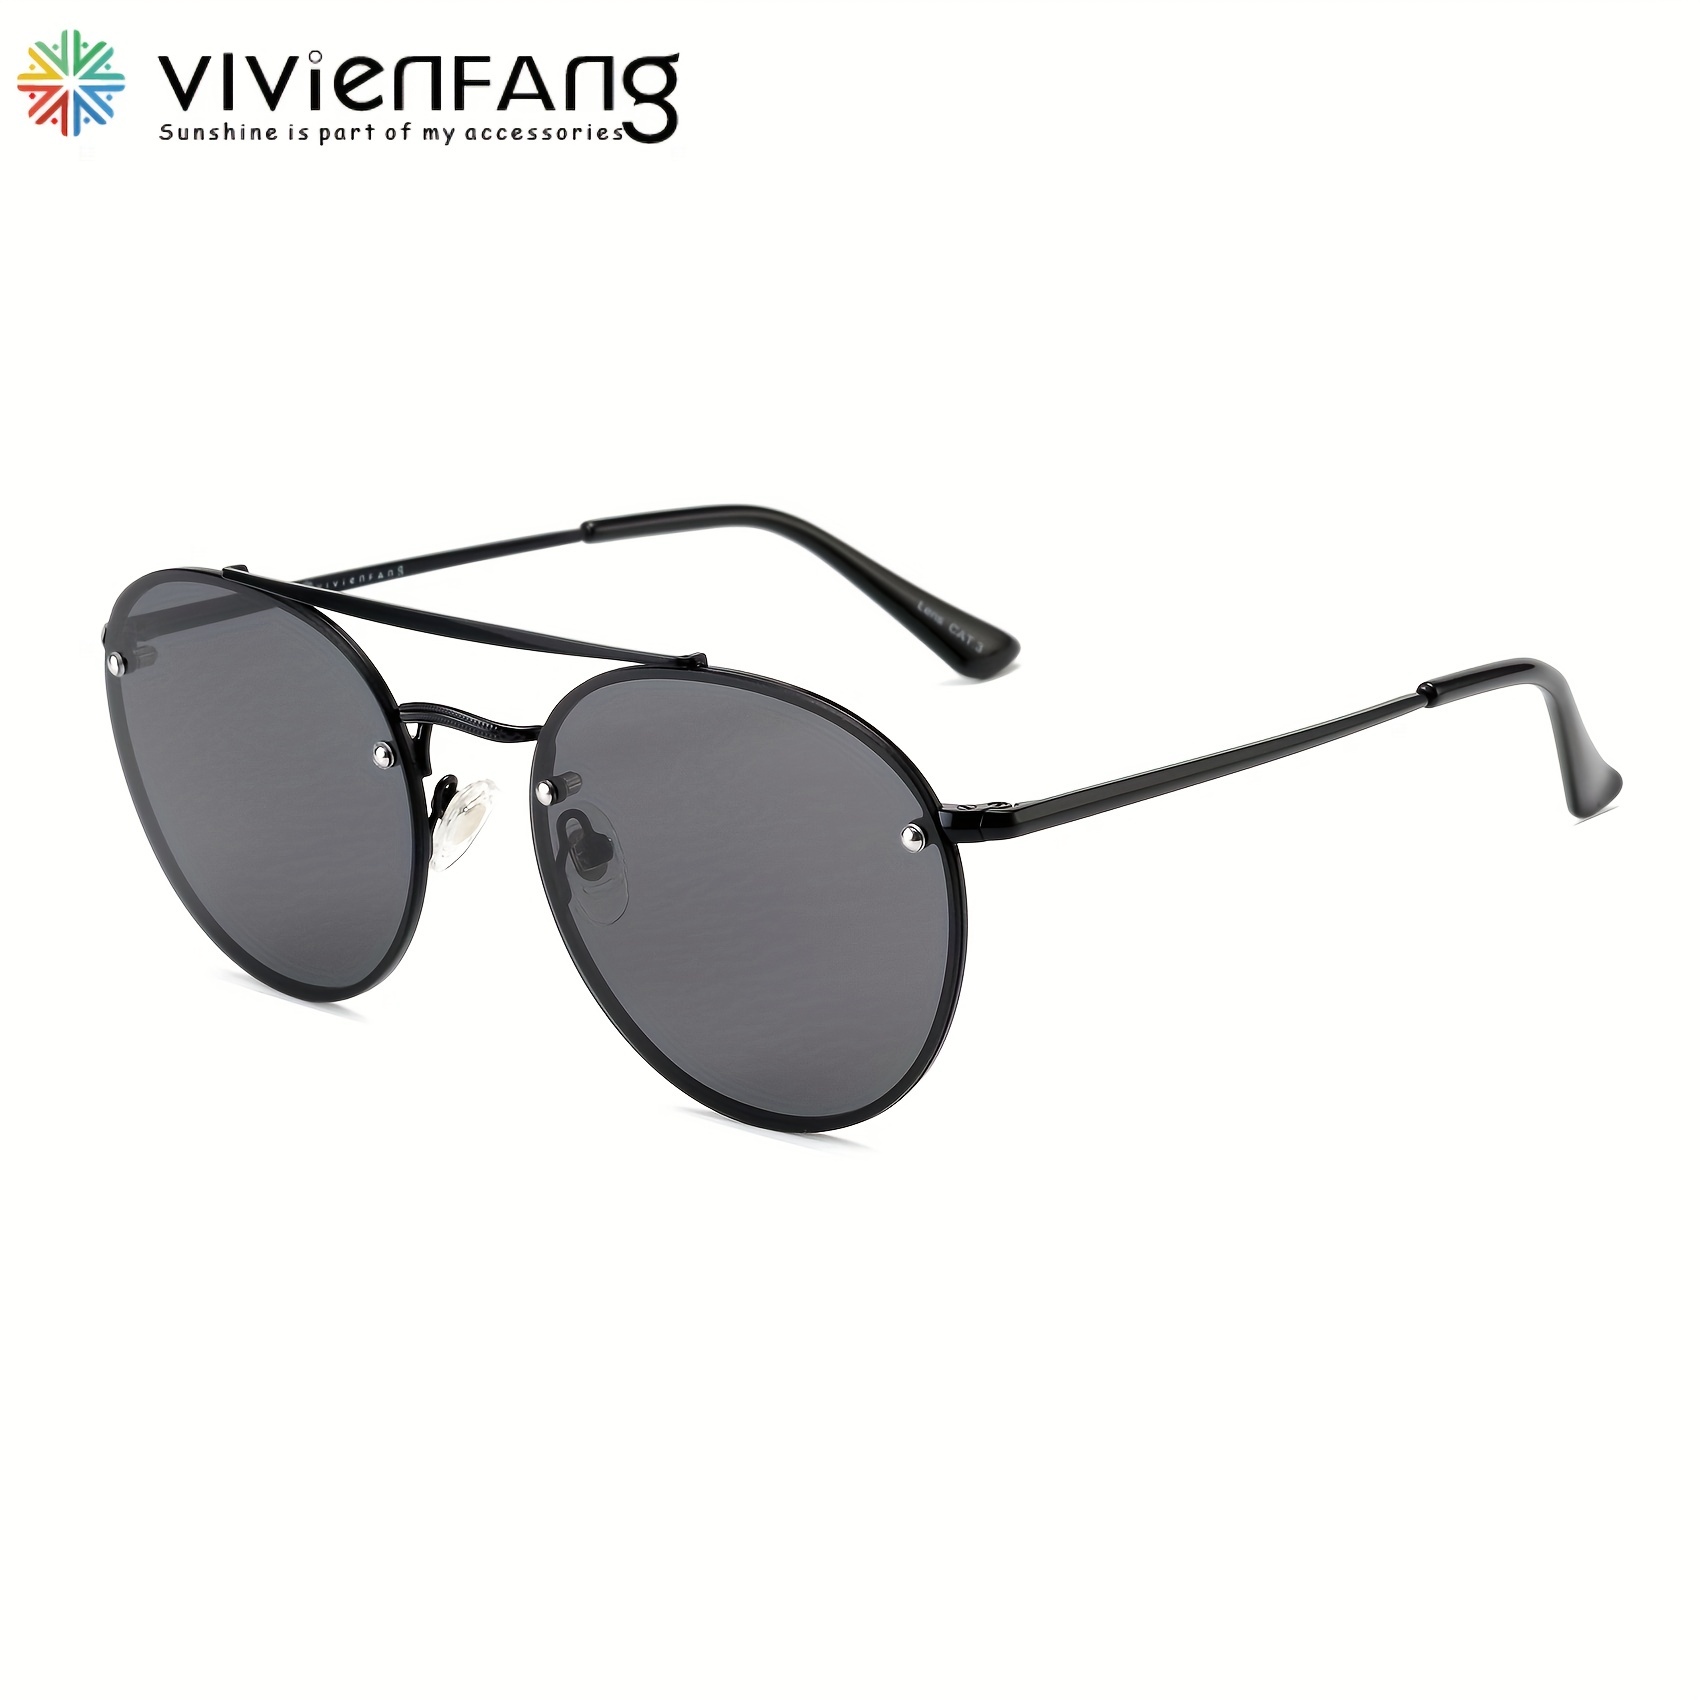 Vivienfang Round Polarized Sunglasses Men Uv Protection Decorative